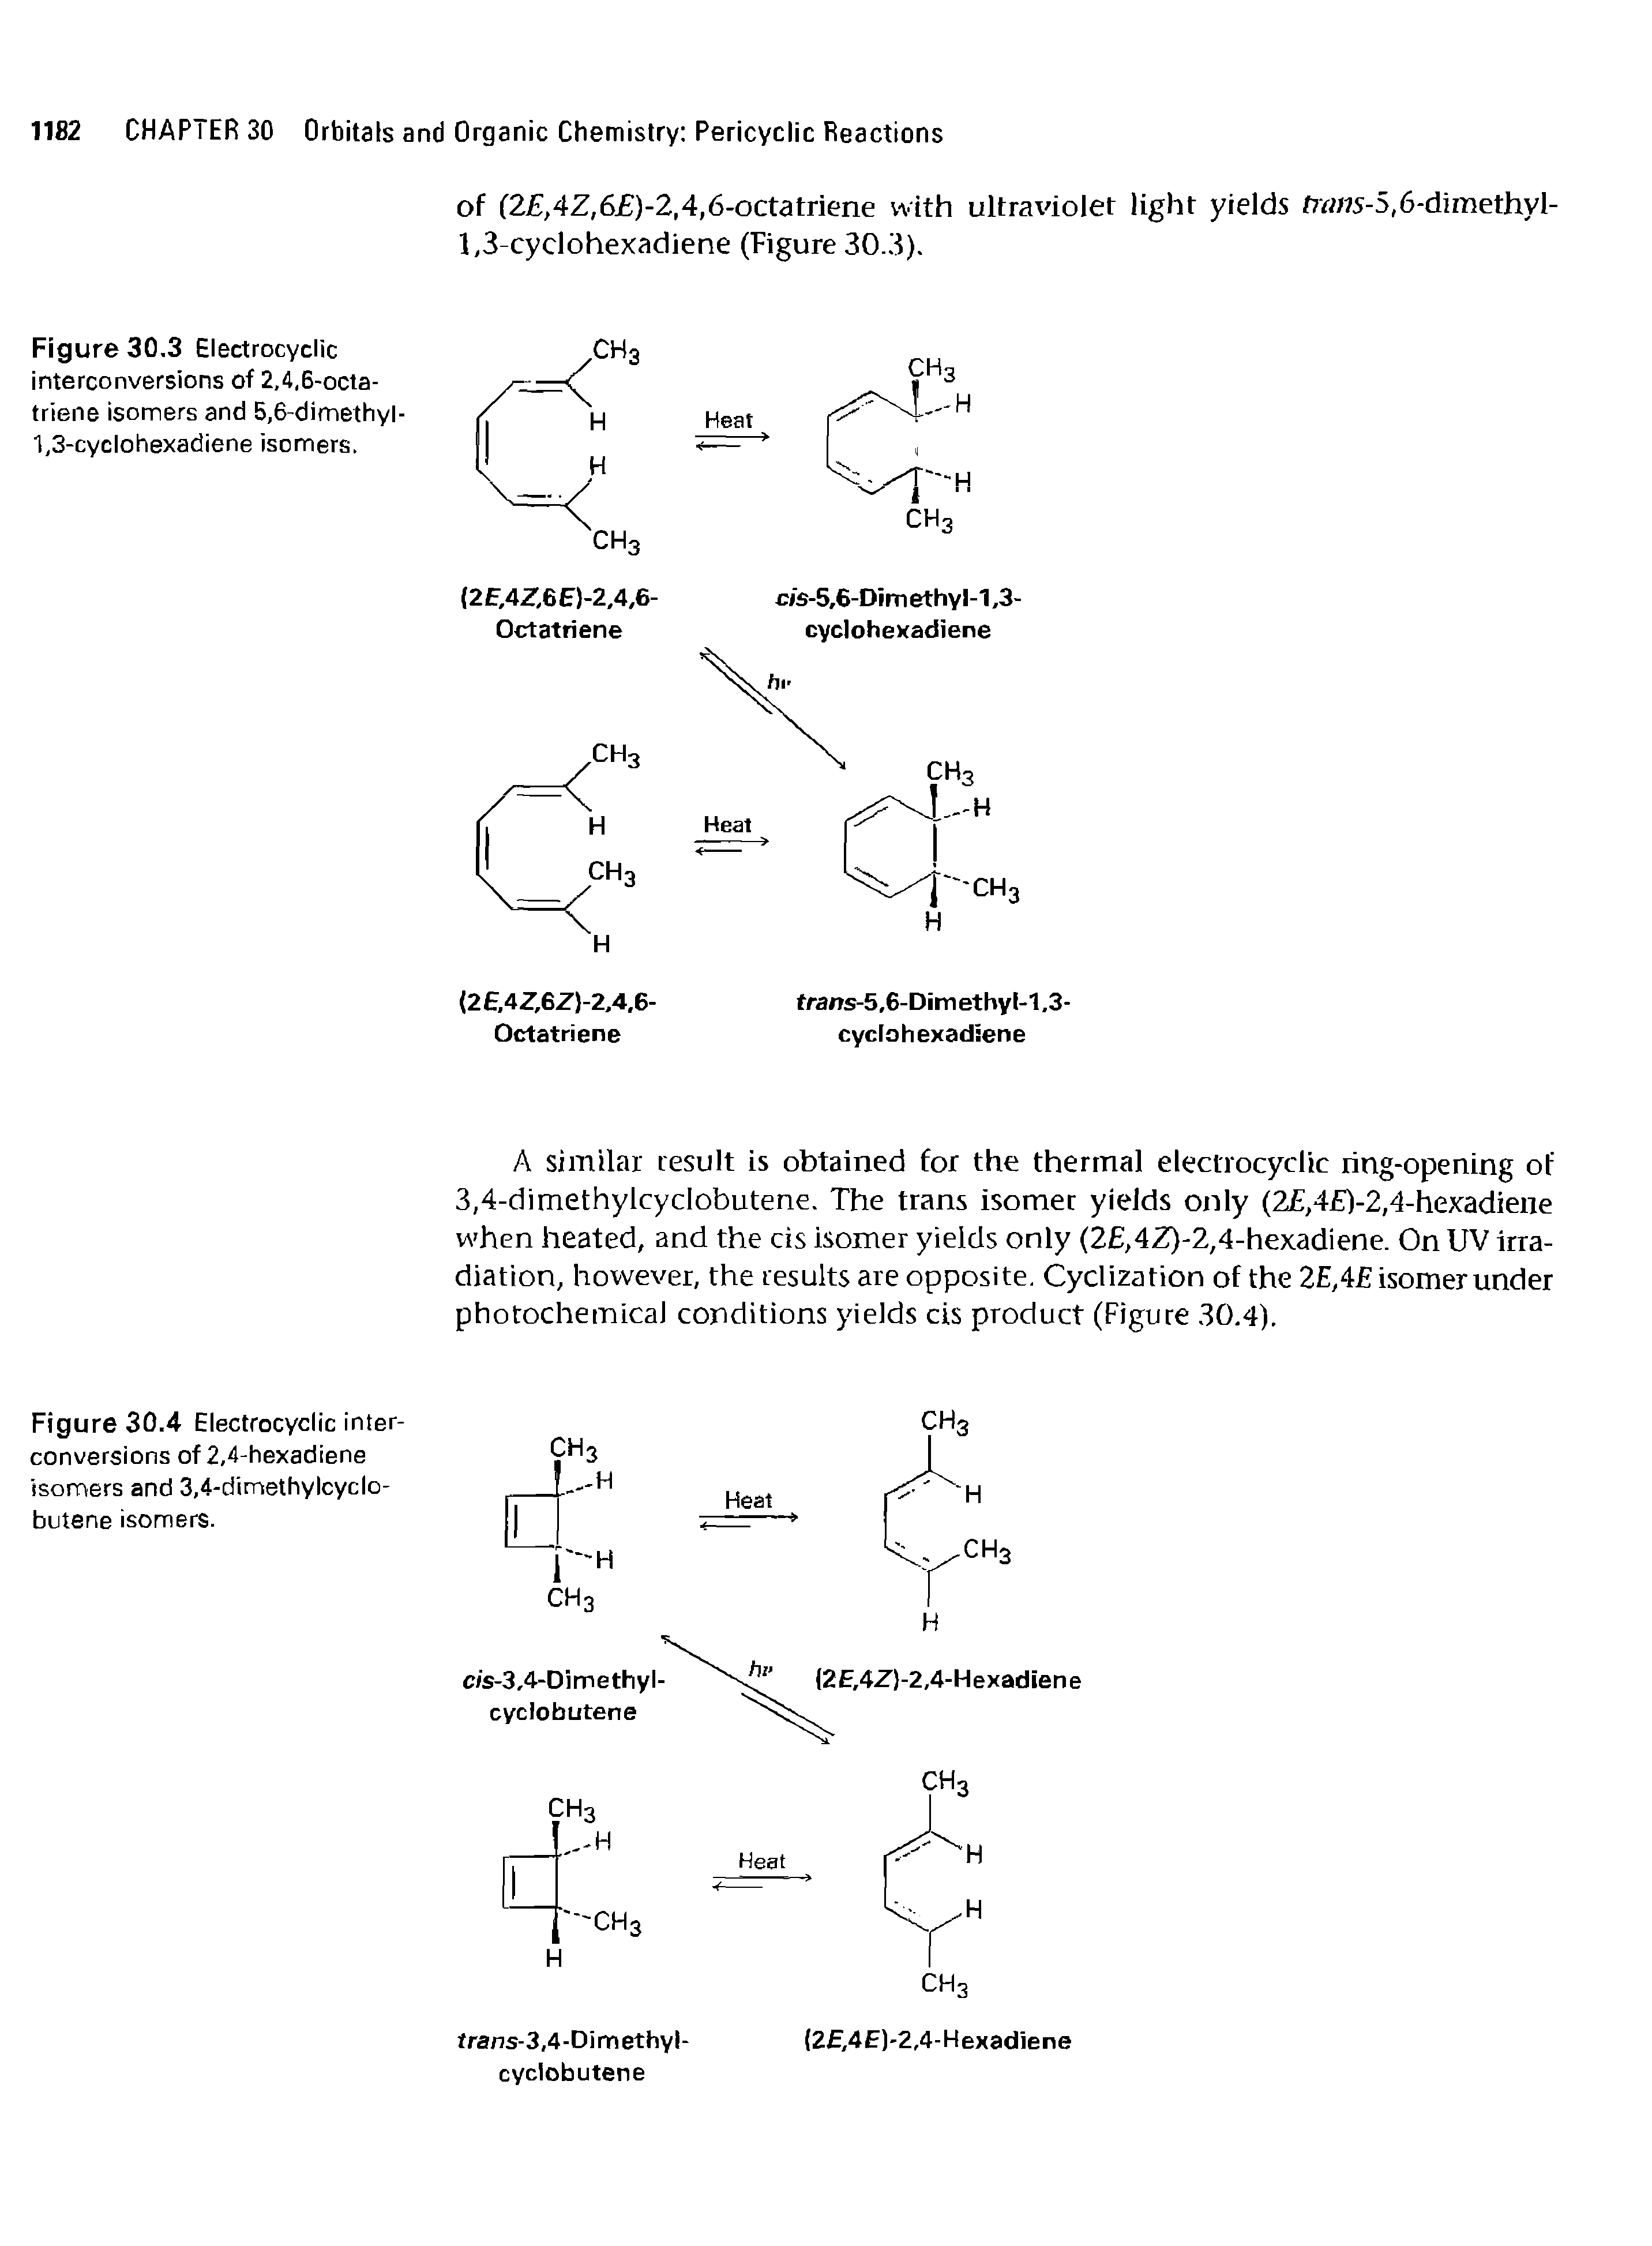 Figure 30.4 Electrocyclic interconversions of 2,4-hexadiene isomers and 3,4-dimethylcyclo-butene isomers.